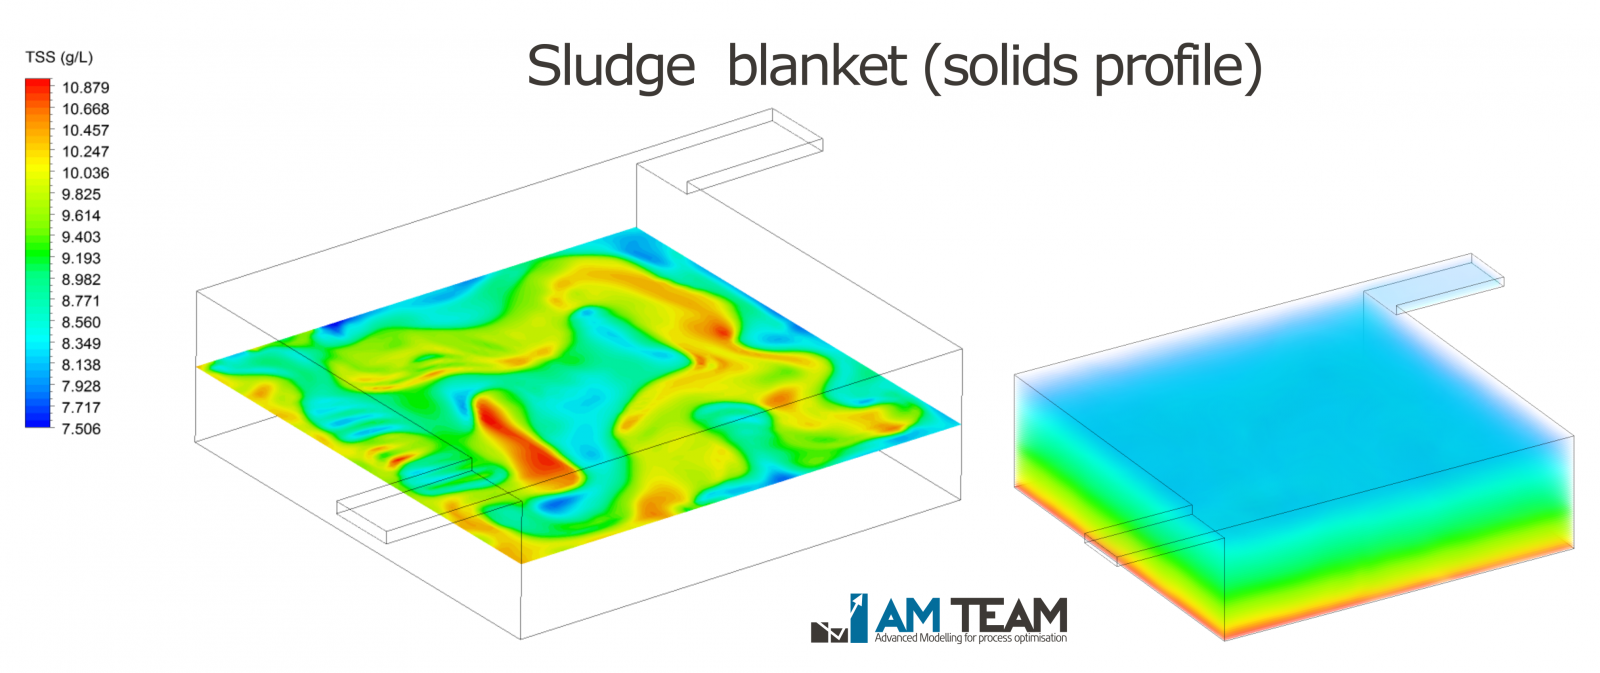 Sludge blanket simulation using CFD